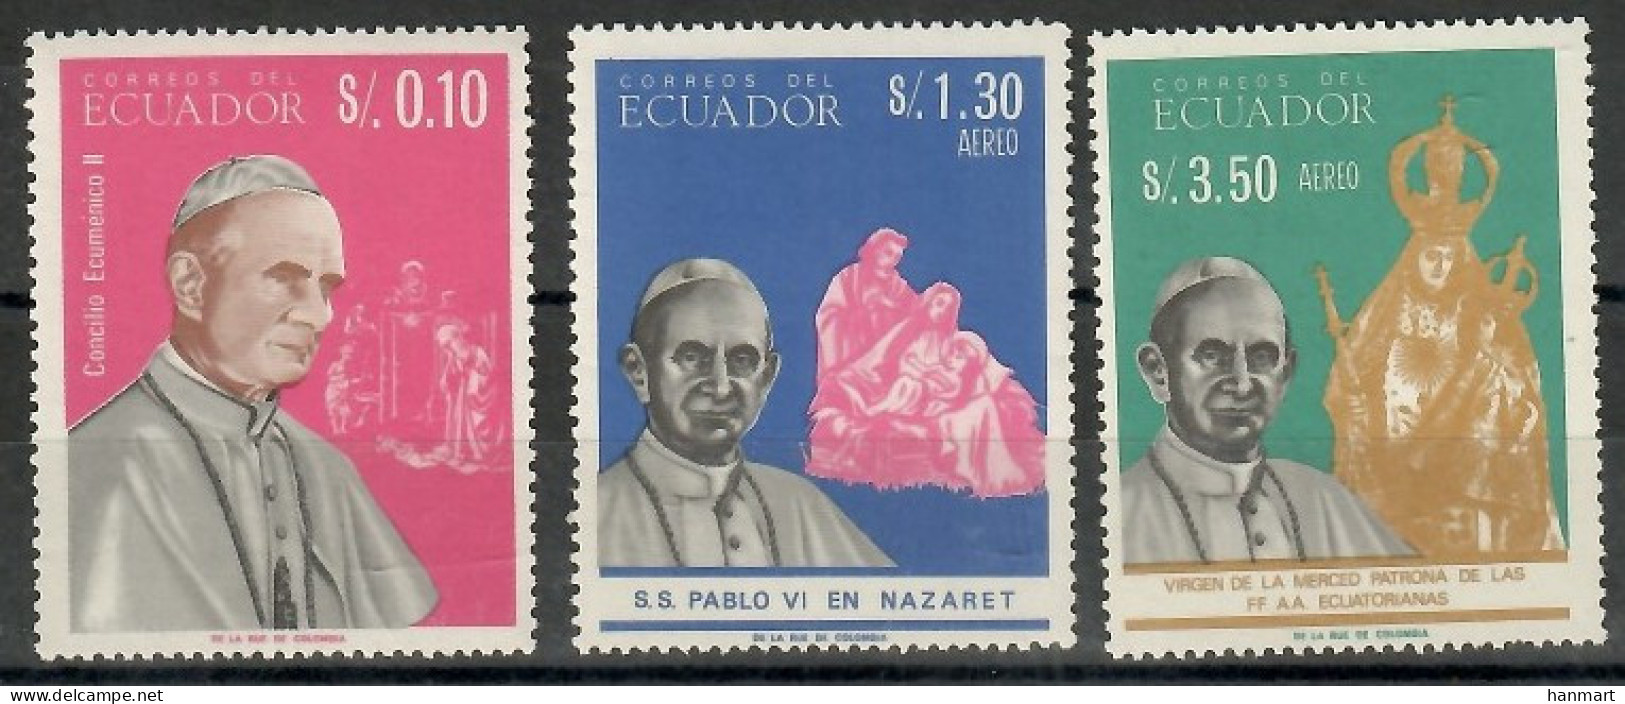 Ecuador 1966 Mi 1242-1244 MNH  (ZS3 ECD1242-1244) - Christmas